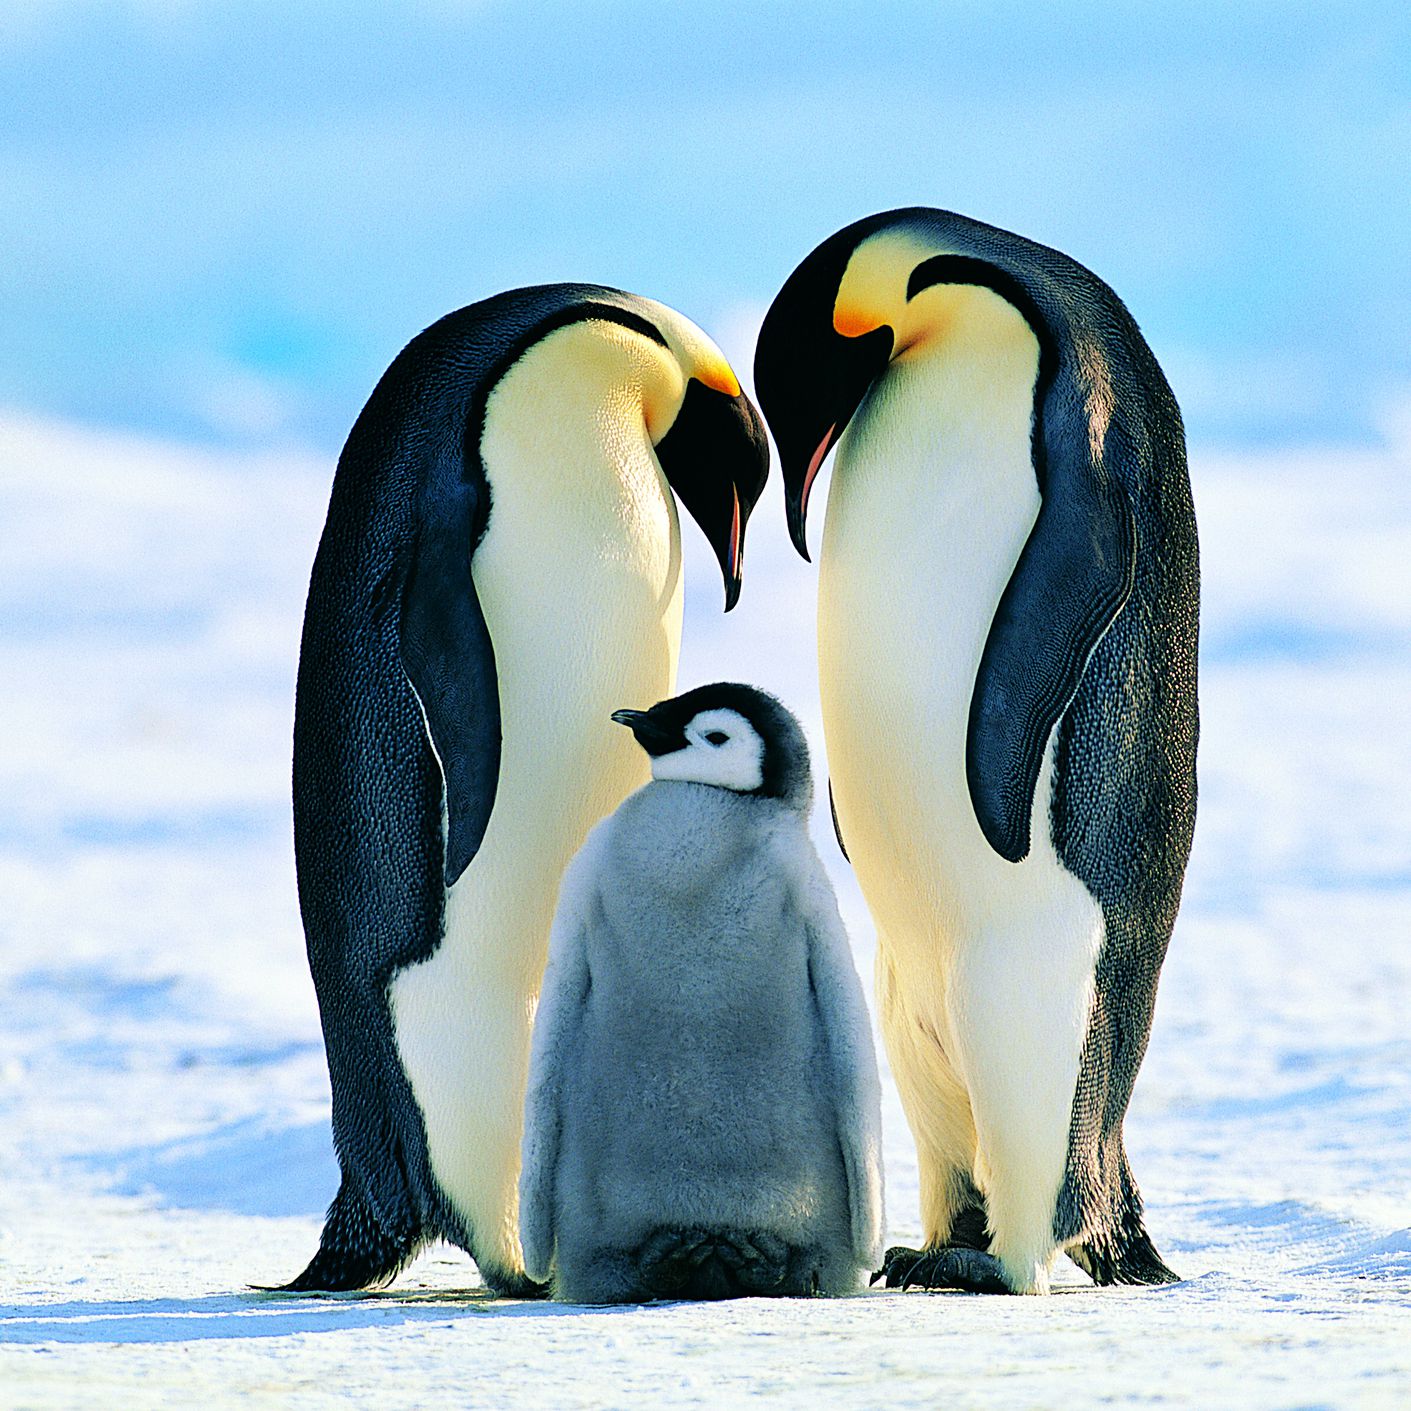 Penguins-Biggest Birds In The World